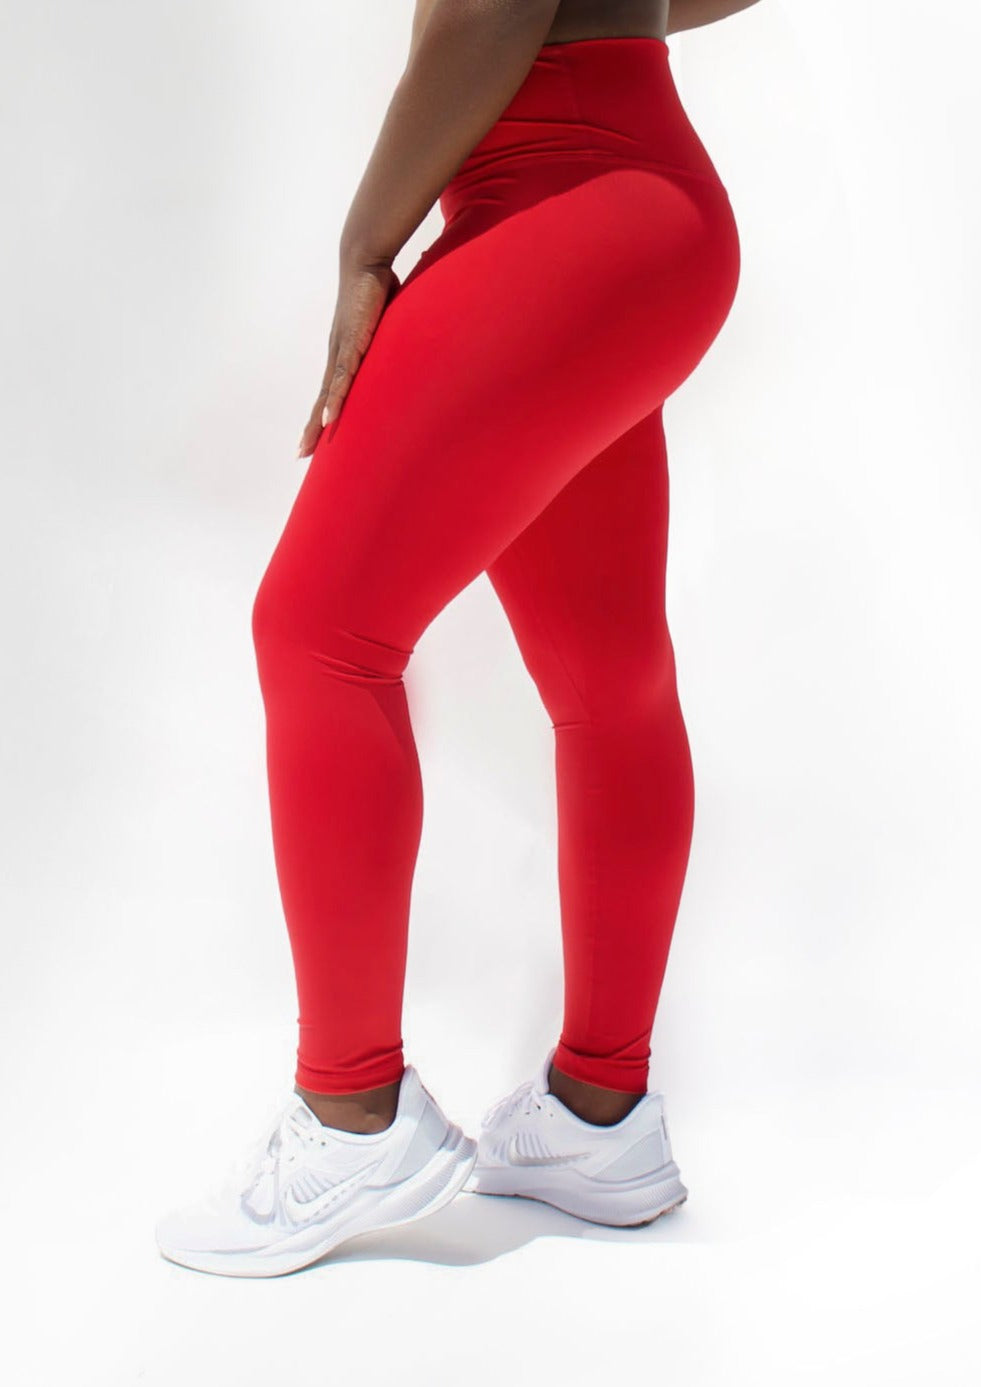 Buy Flexnest Women's Stretch Fit Superflex Active wear Yoga Pants Workout Leggings  High Waist Gym Pants for Women - (Leg-P_Forest Green_XS) at Amazon.in